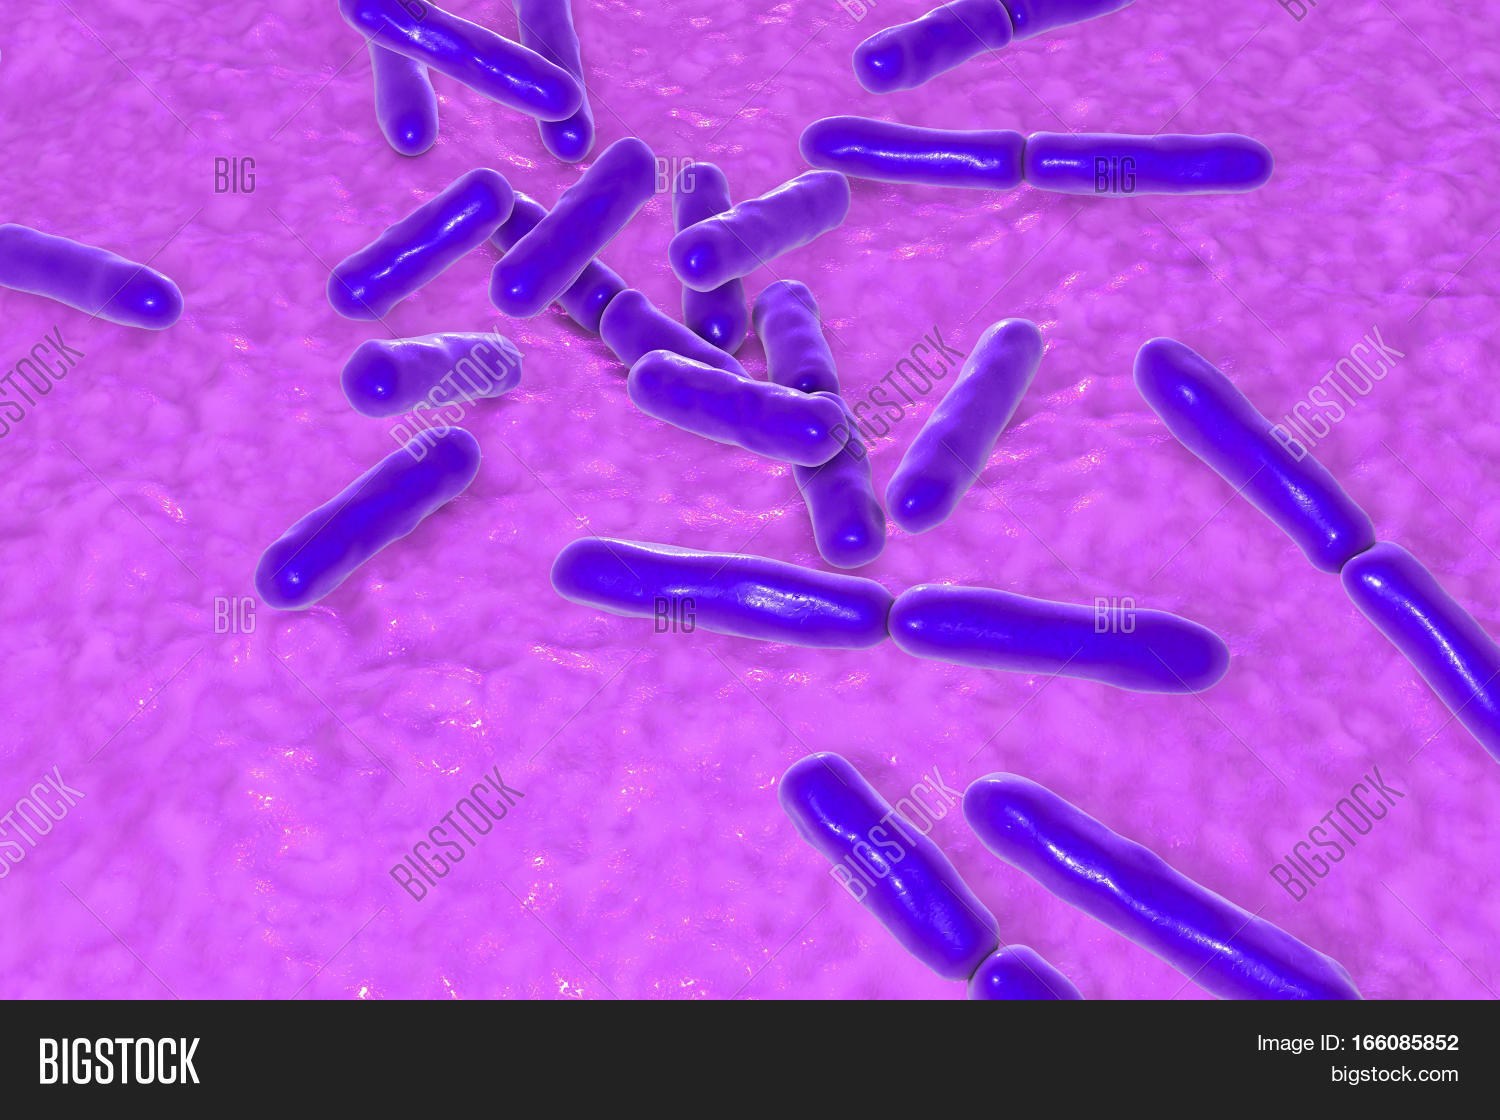 Men-vi-sinh-chua-chung-vi-khuan-bifidobacterium